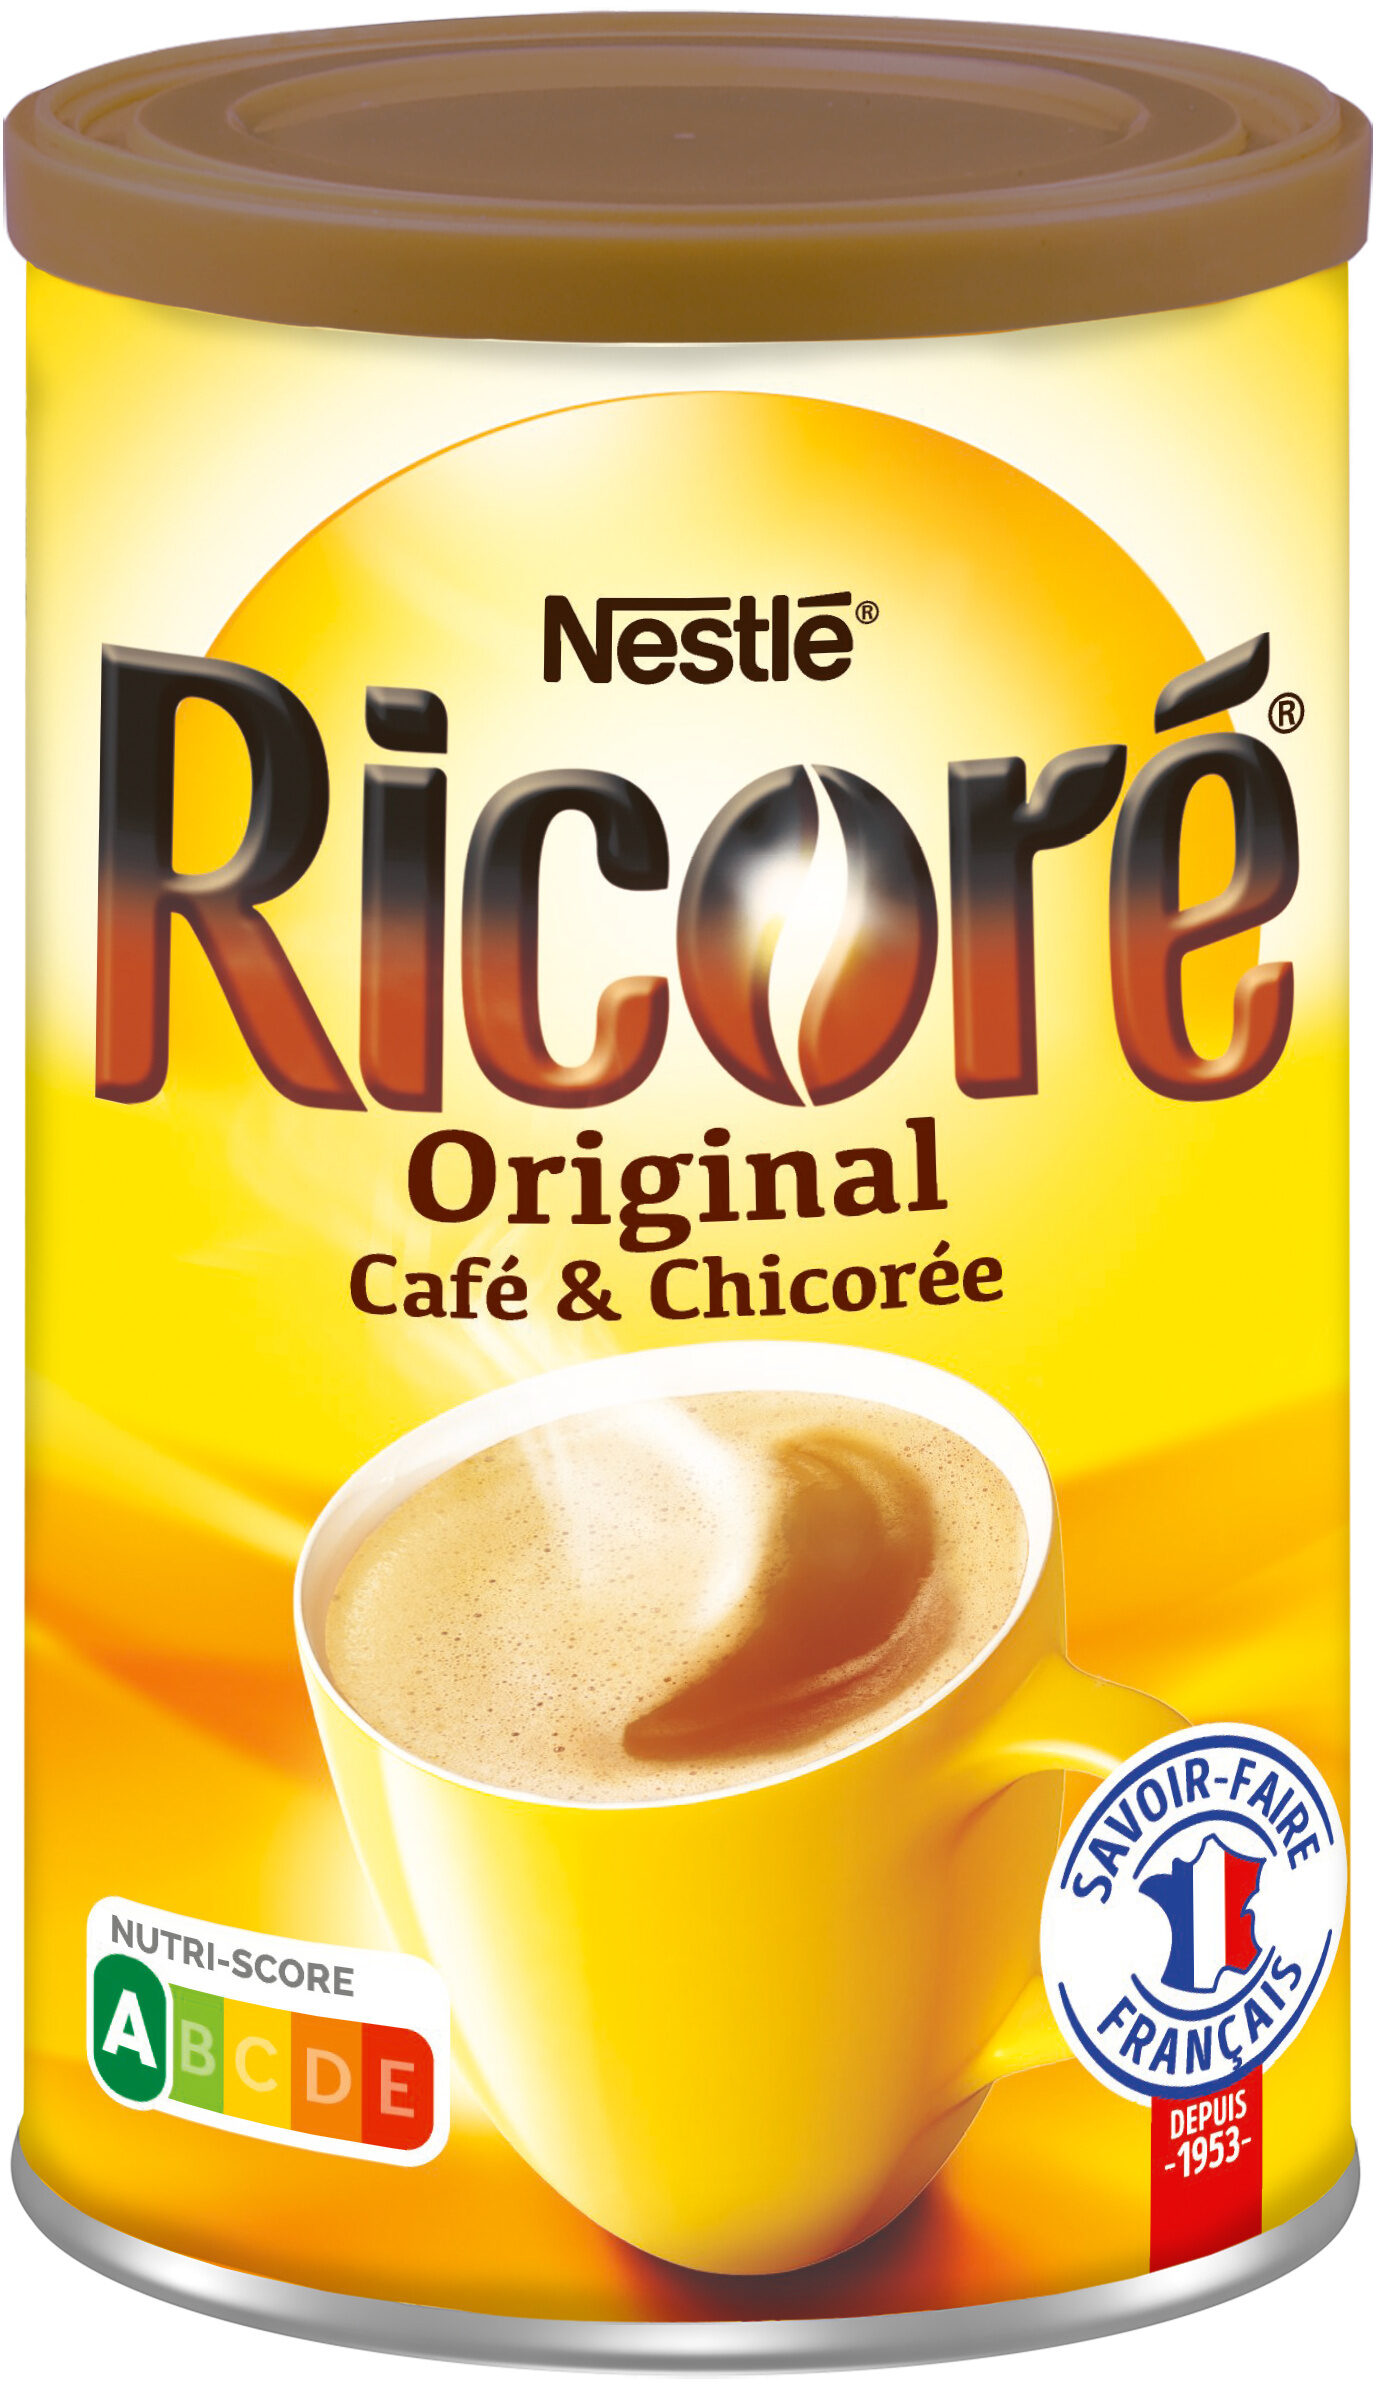 RICORE Original, Café & Chicorée, Boîte - Produit - fr